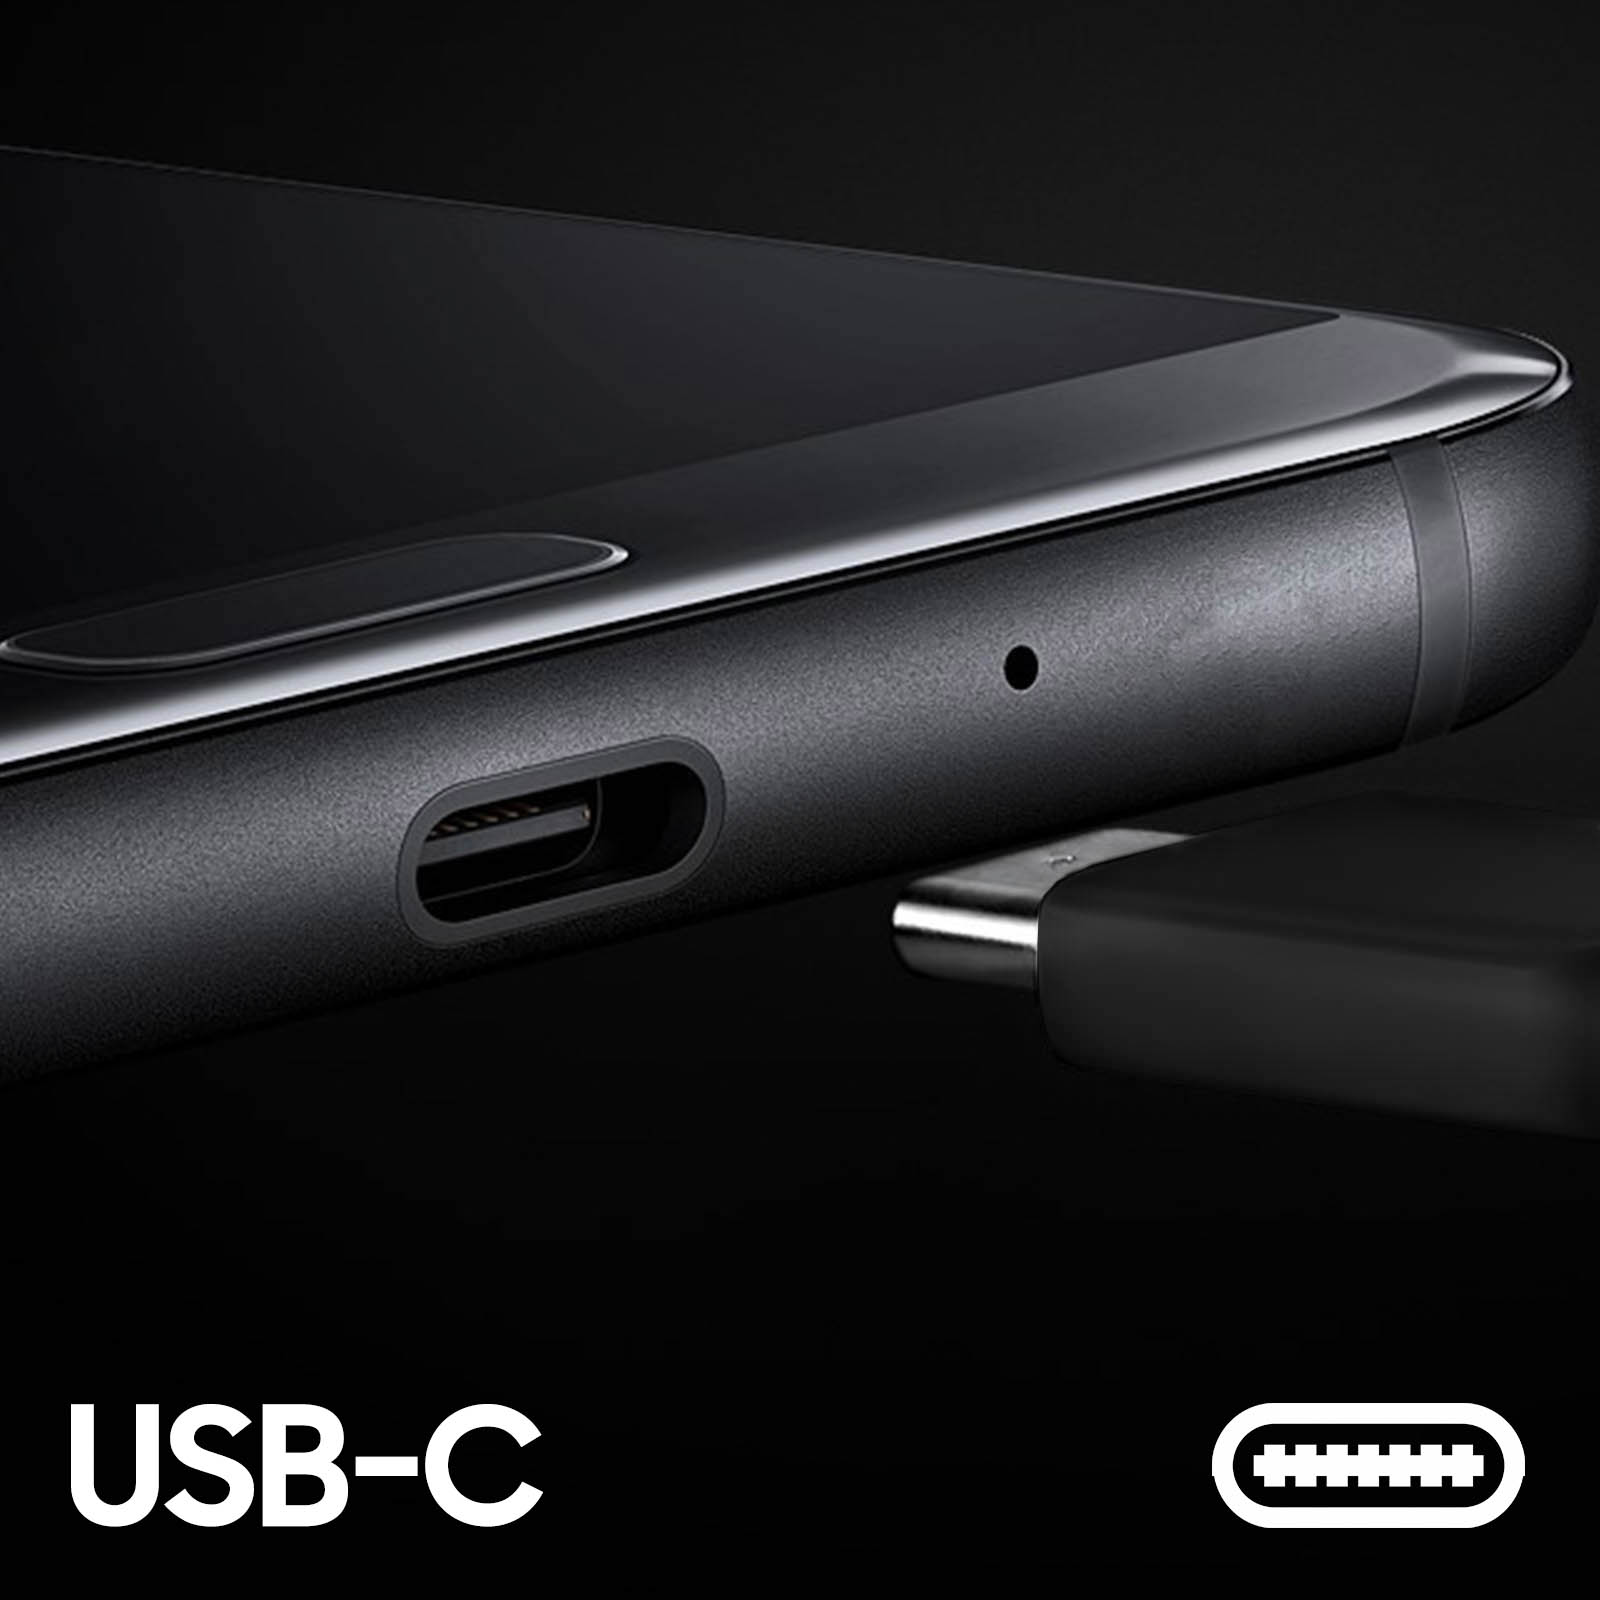 Auriculares Samsung de AKG USB tipo C, kit manos libres – Negro